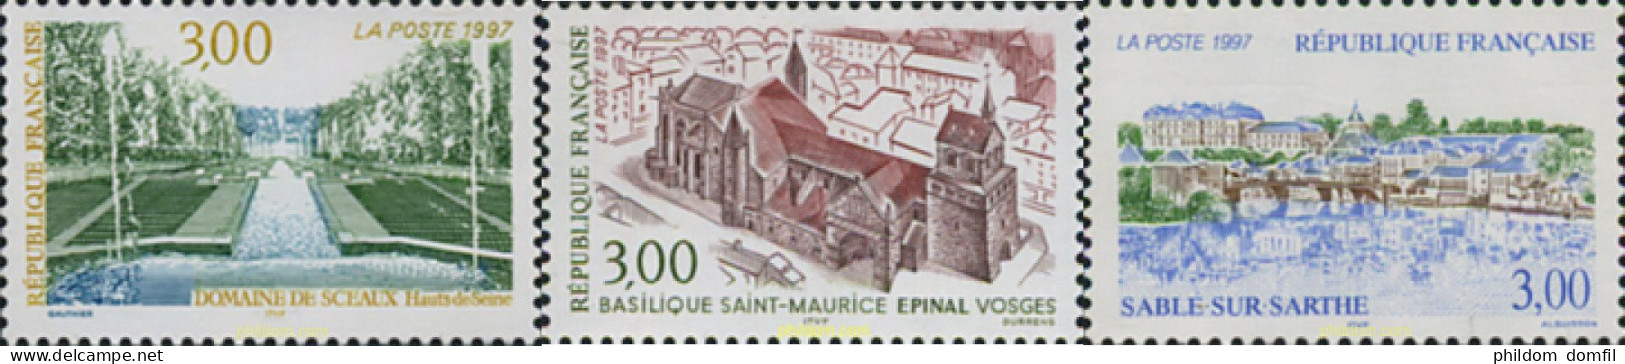 124496 MNH FRANCIA 1997 TURISMO - Châteaux